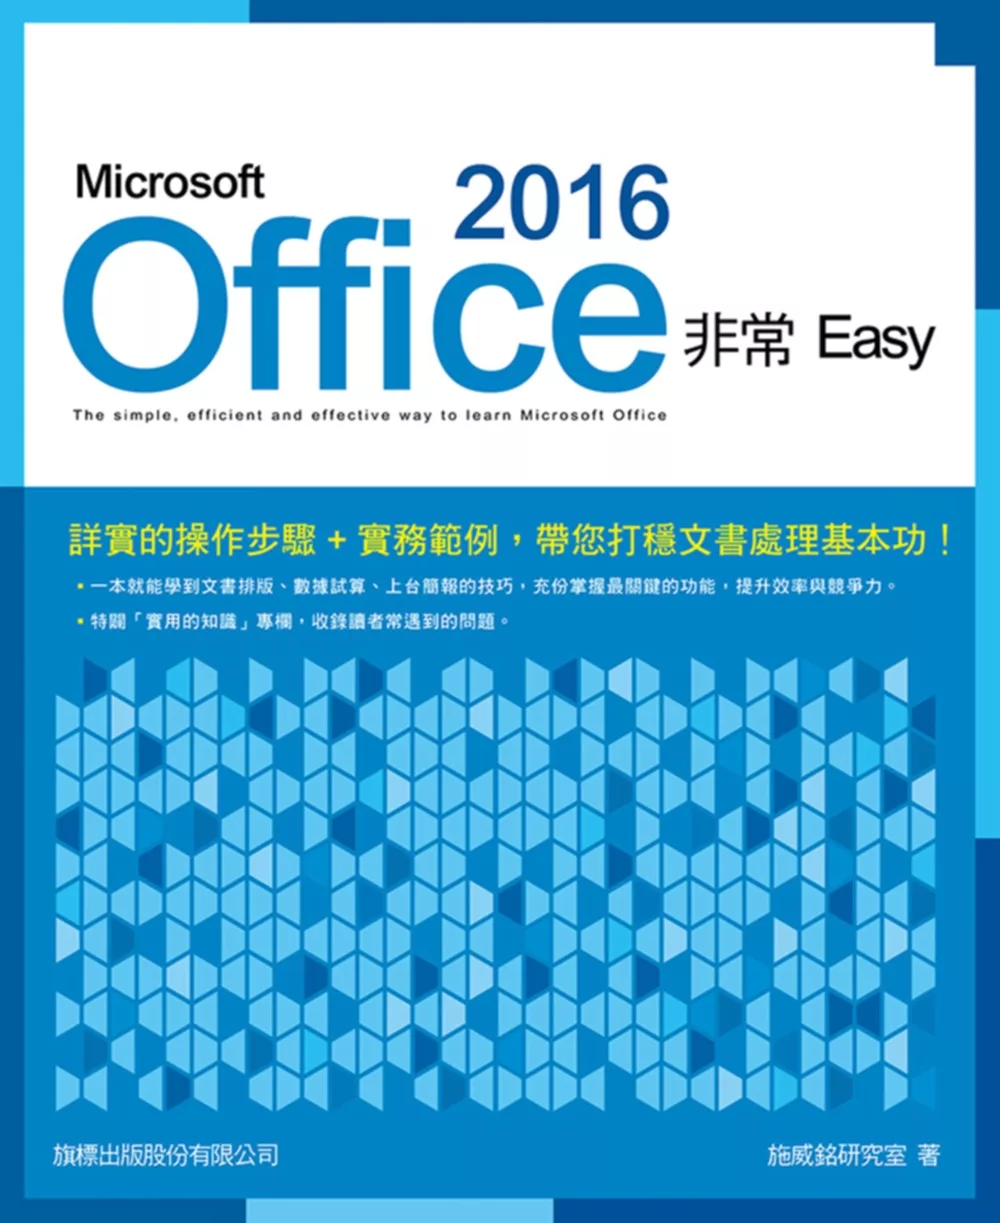 microsoft office 2016 amazon